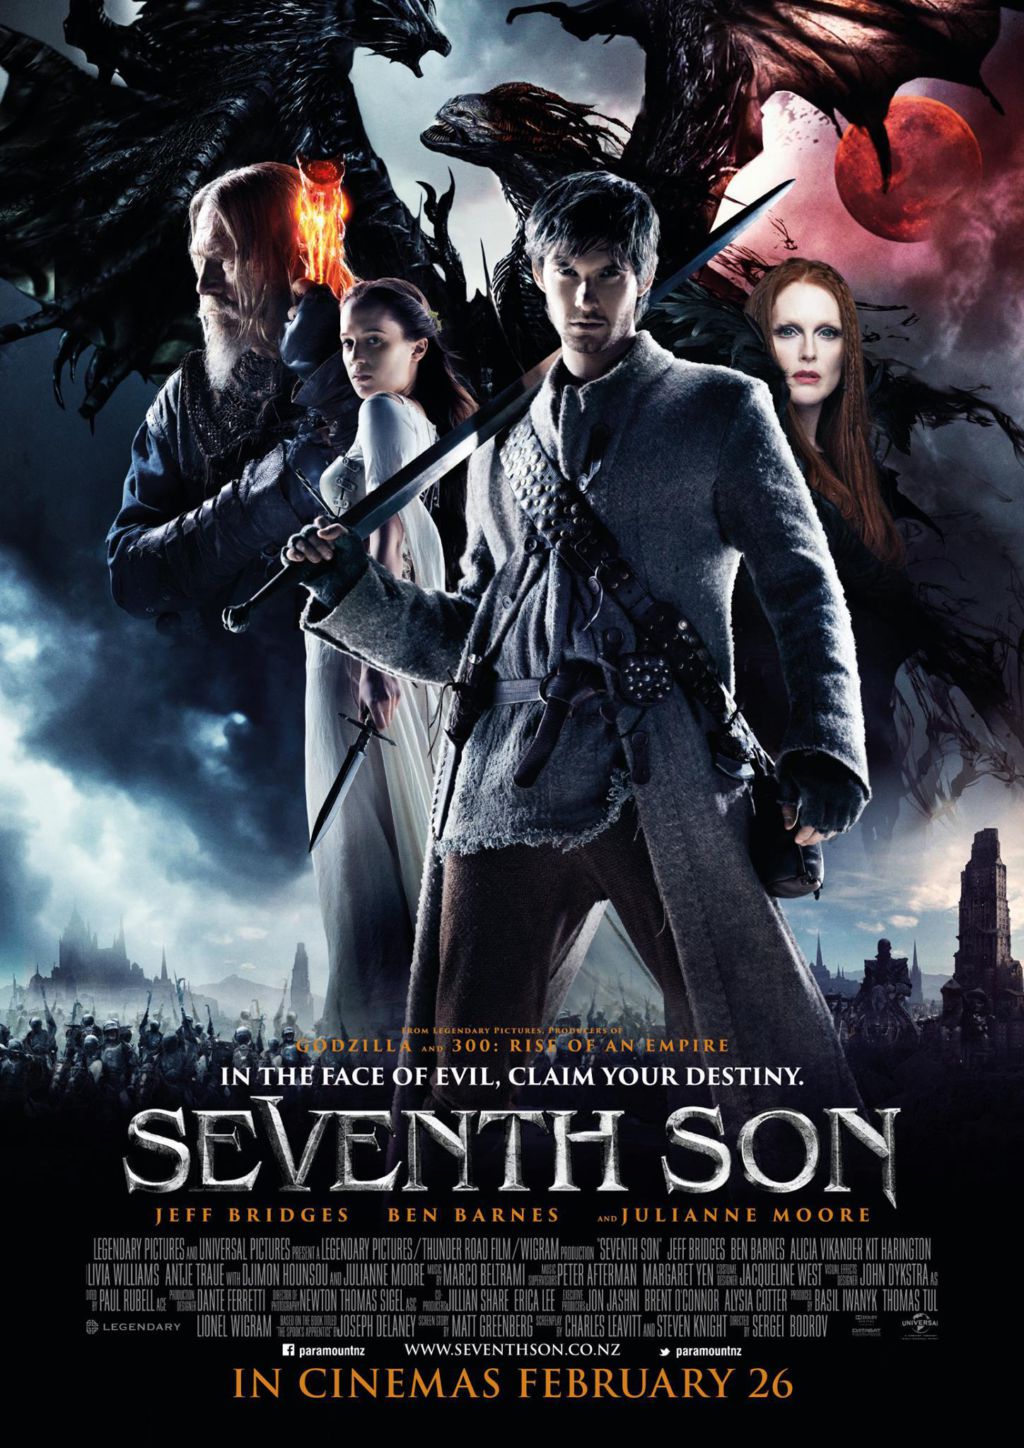 the seventh son movie cast